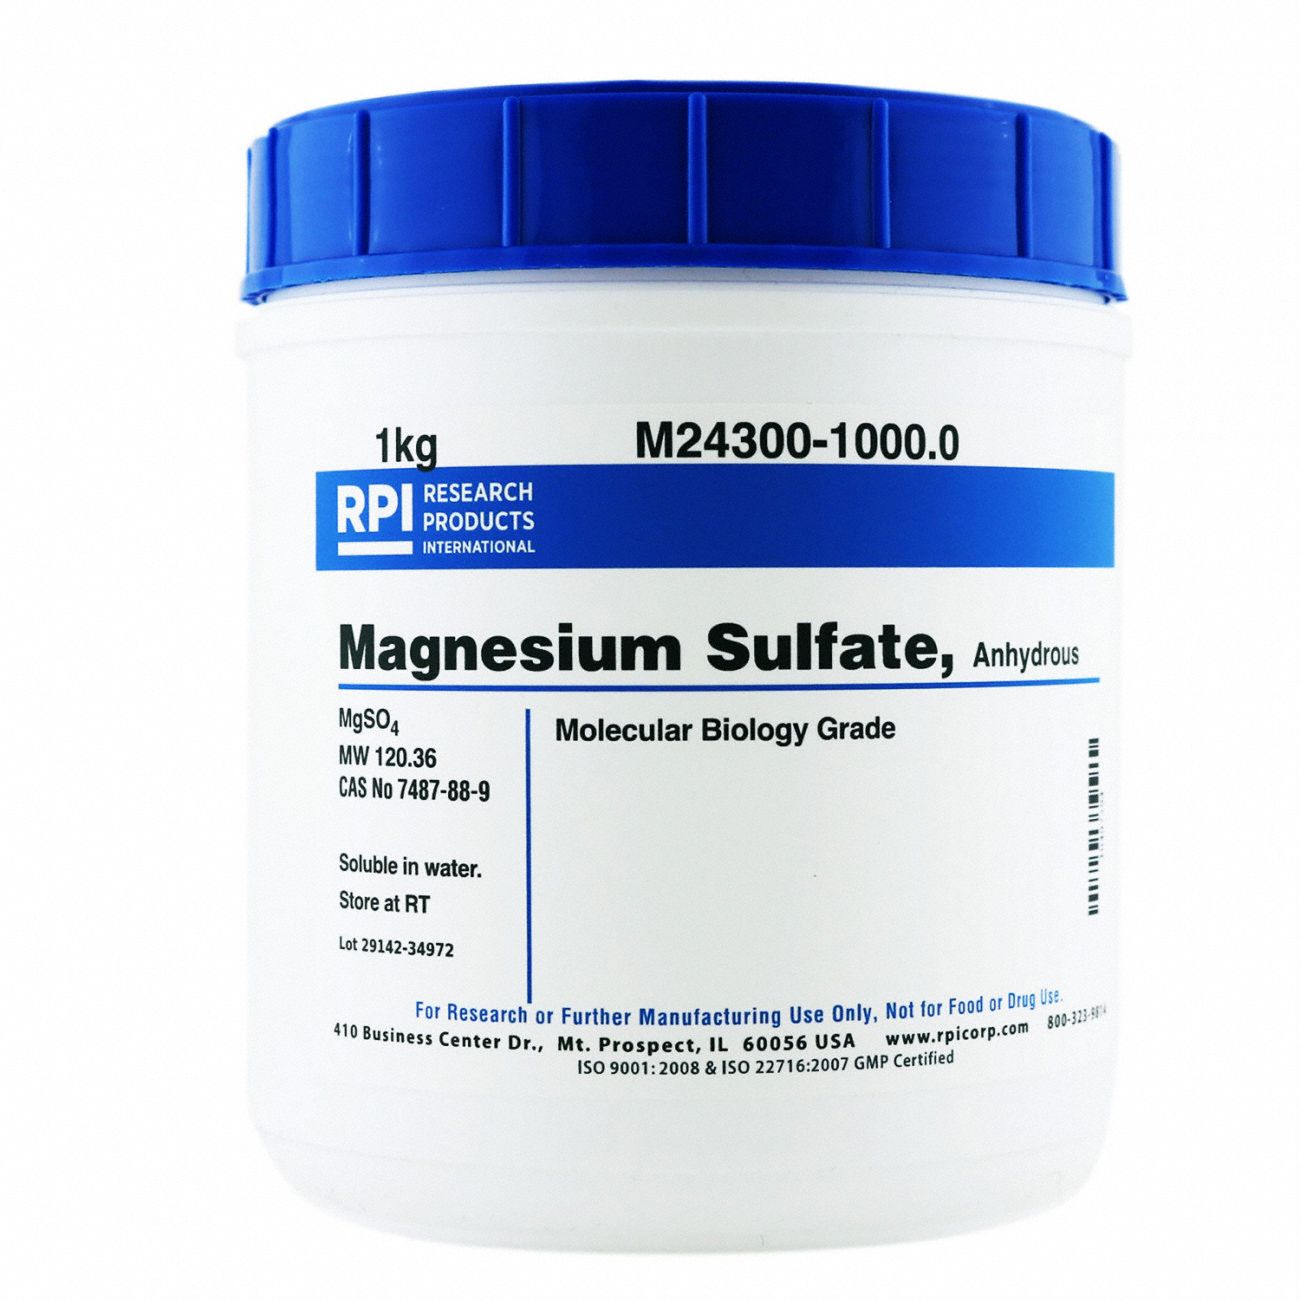 M24300-1000.0 - Magnesium Sulfate Anhydrous, 1 Kilogram